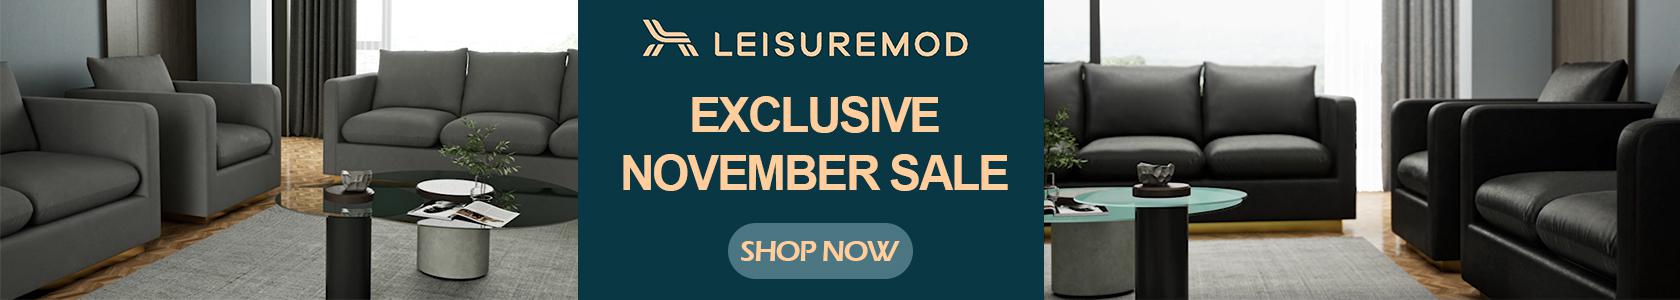 Leisure Mod November Sale banner